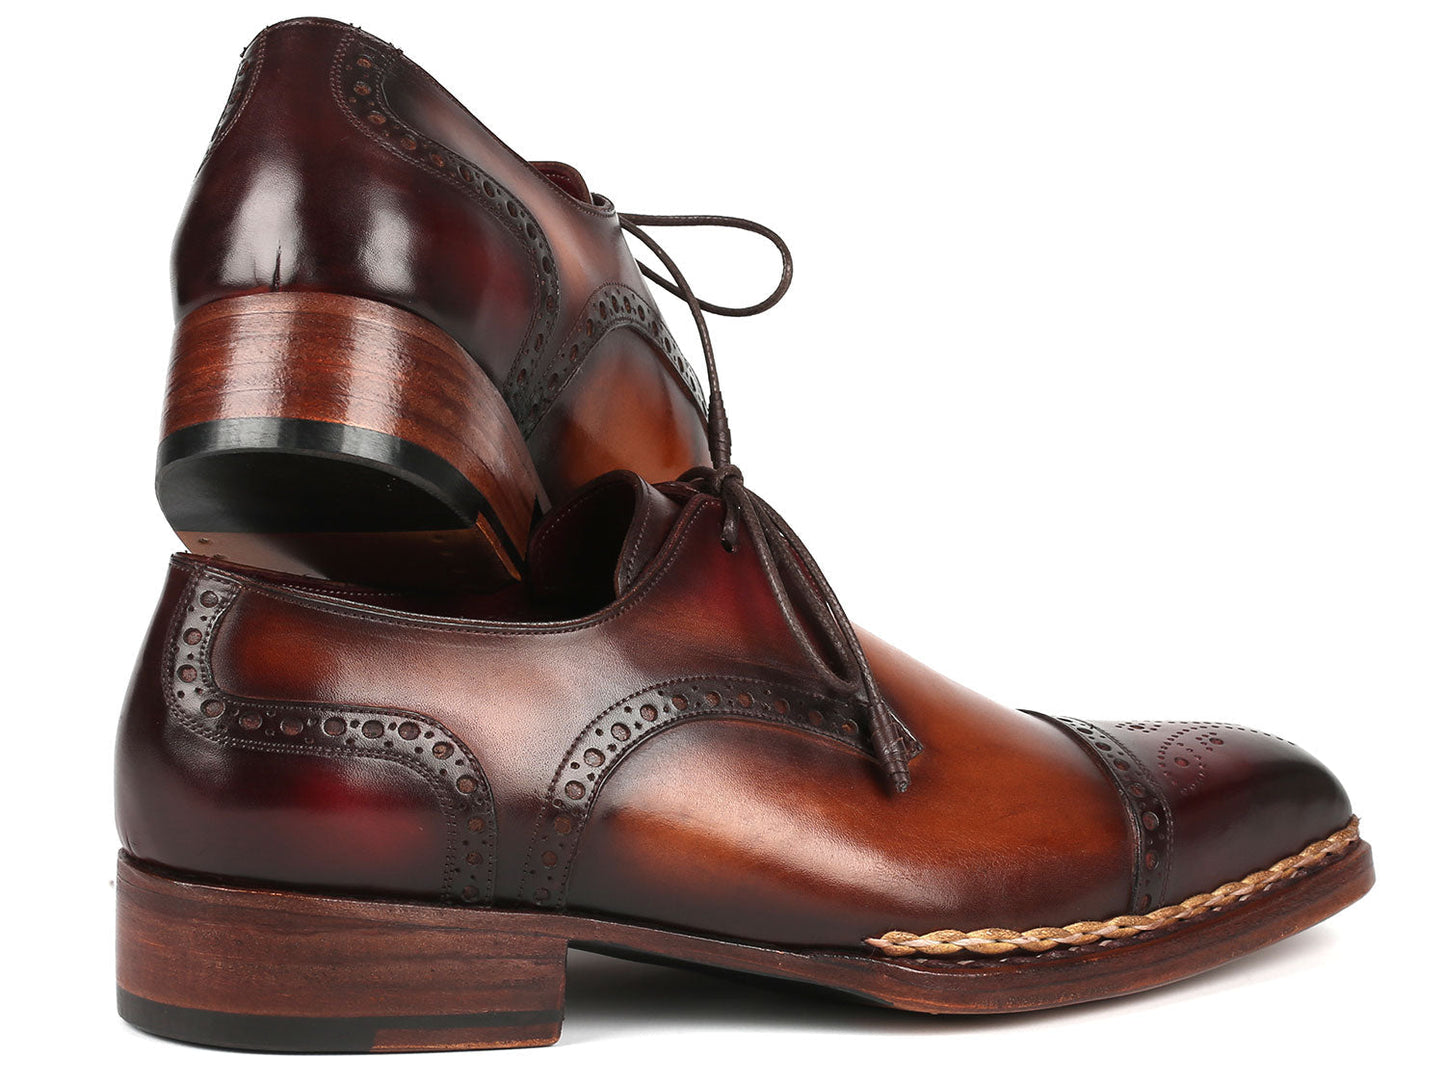 Paul Parkman Norwegian Welted Cap Toe Derby Shoes Bordeaux & Brown (ID#8508-BRW)